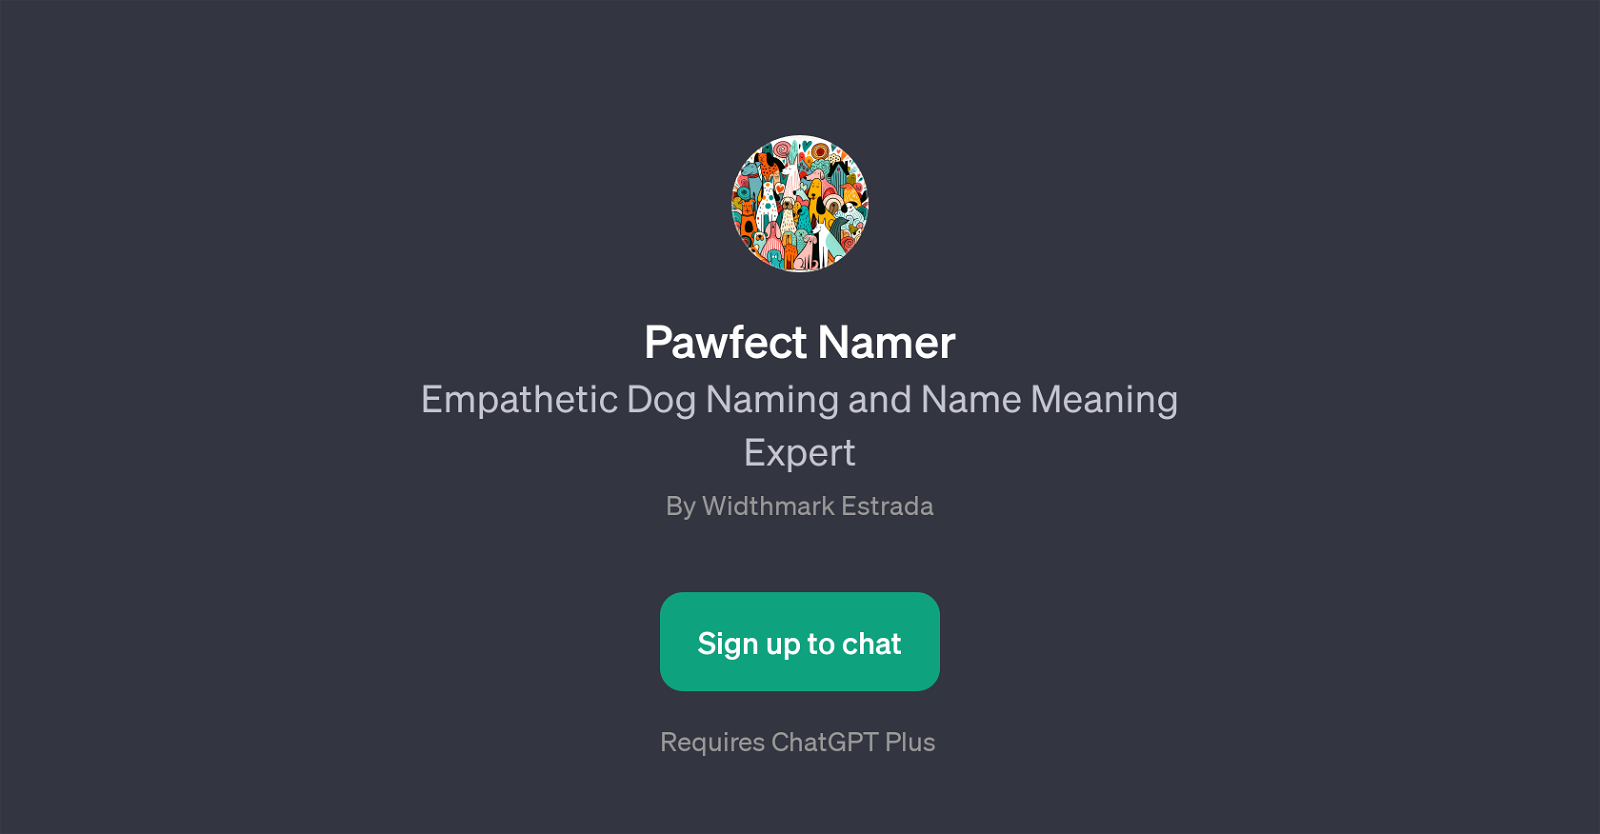 Pawfect Namer website